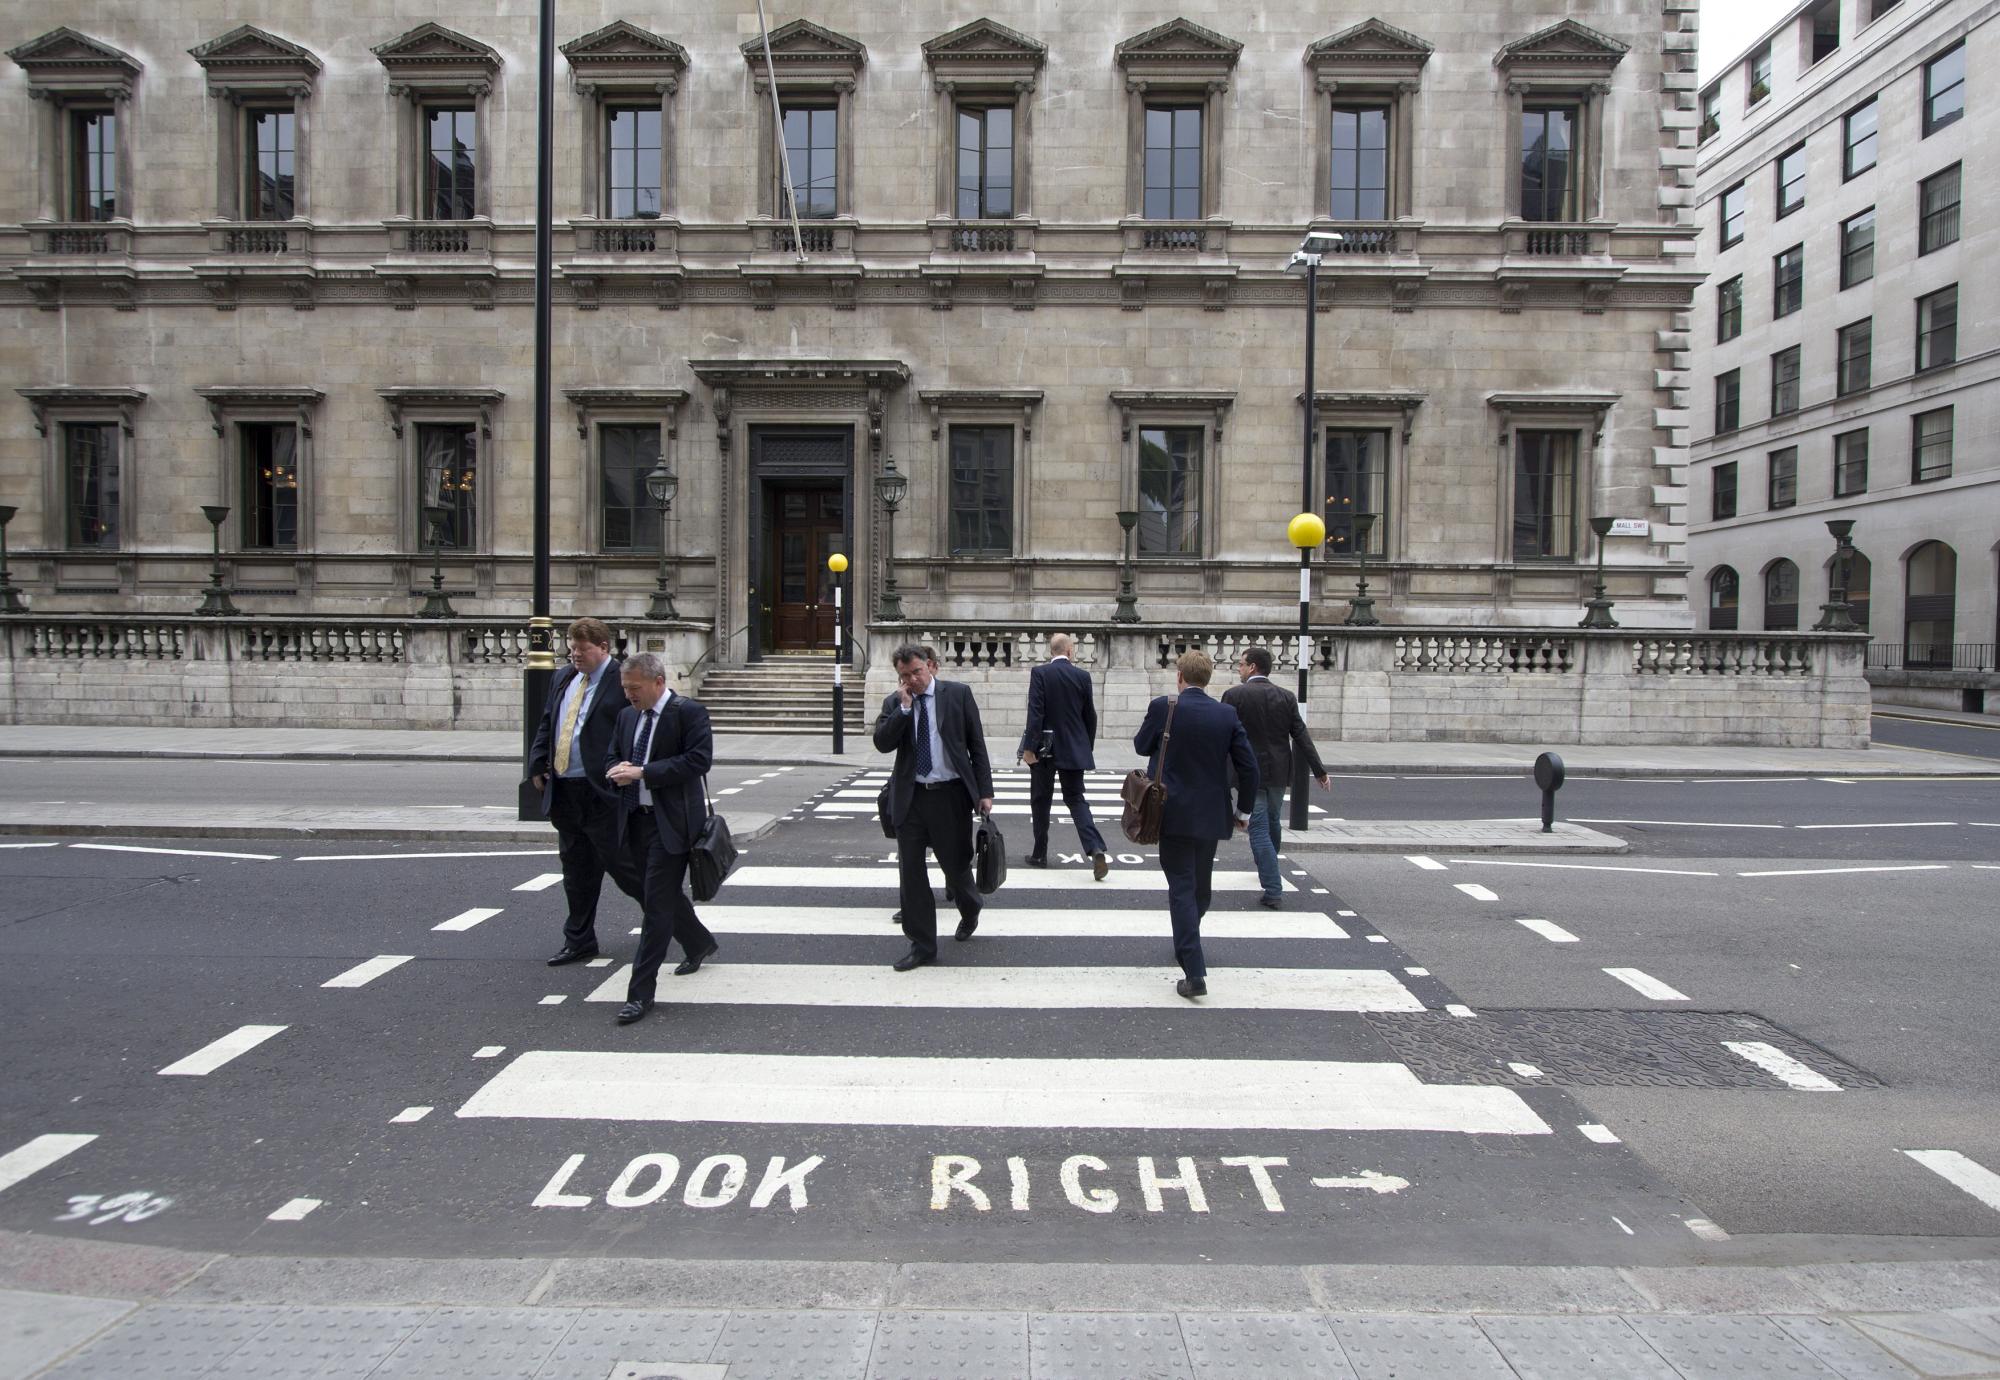 Civil servants crossing the road in London